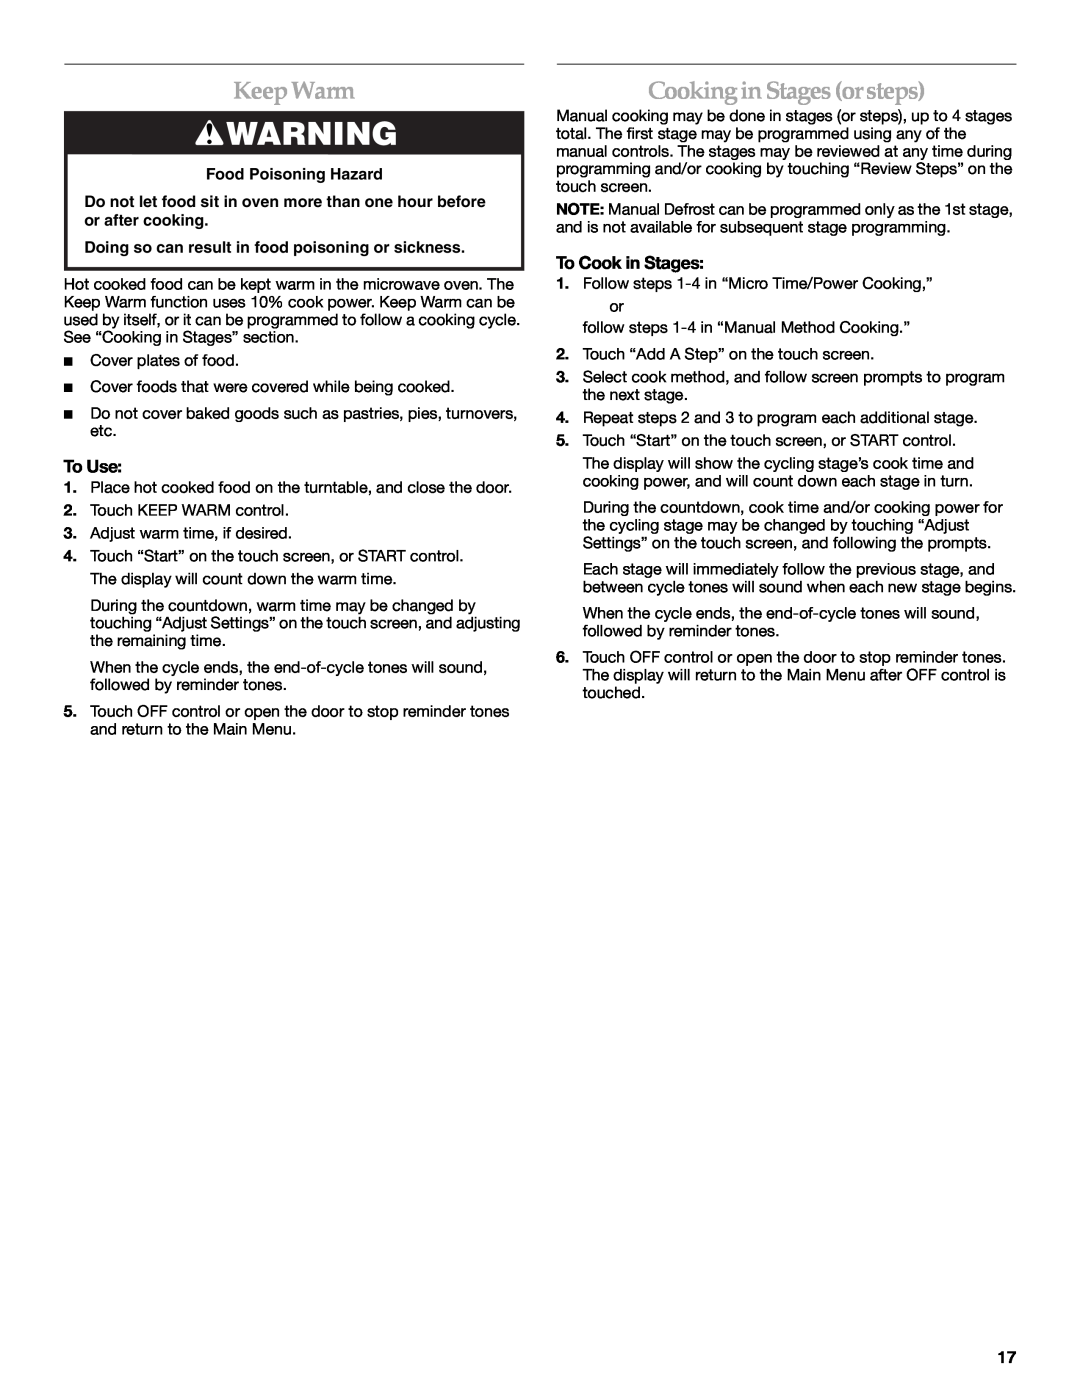 KitchenAid KHMS2056SBL manual KeepWarm, CookinginStagesorsteps, Food Poisoning Hazard 